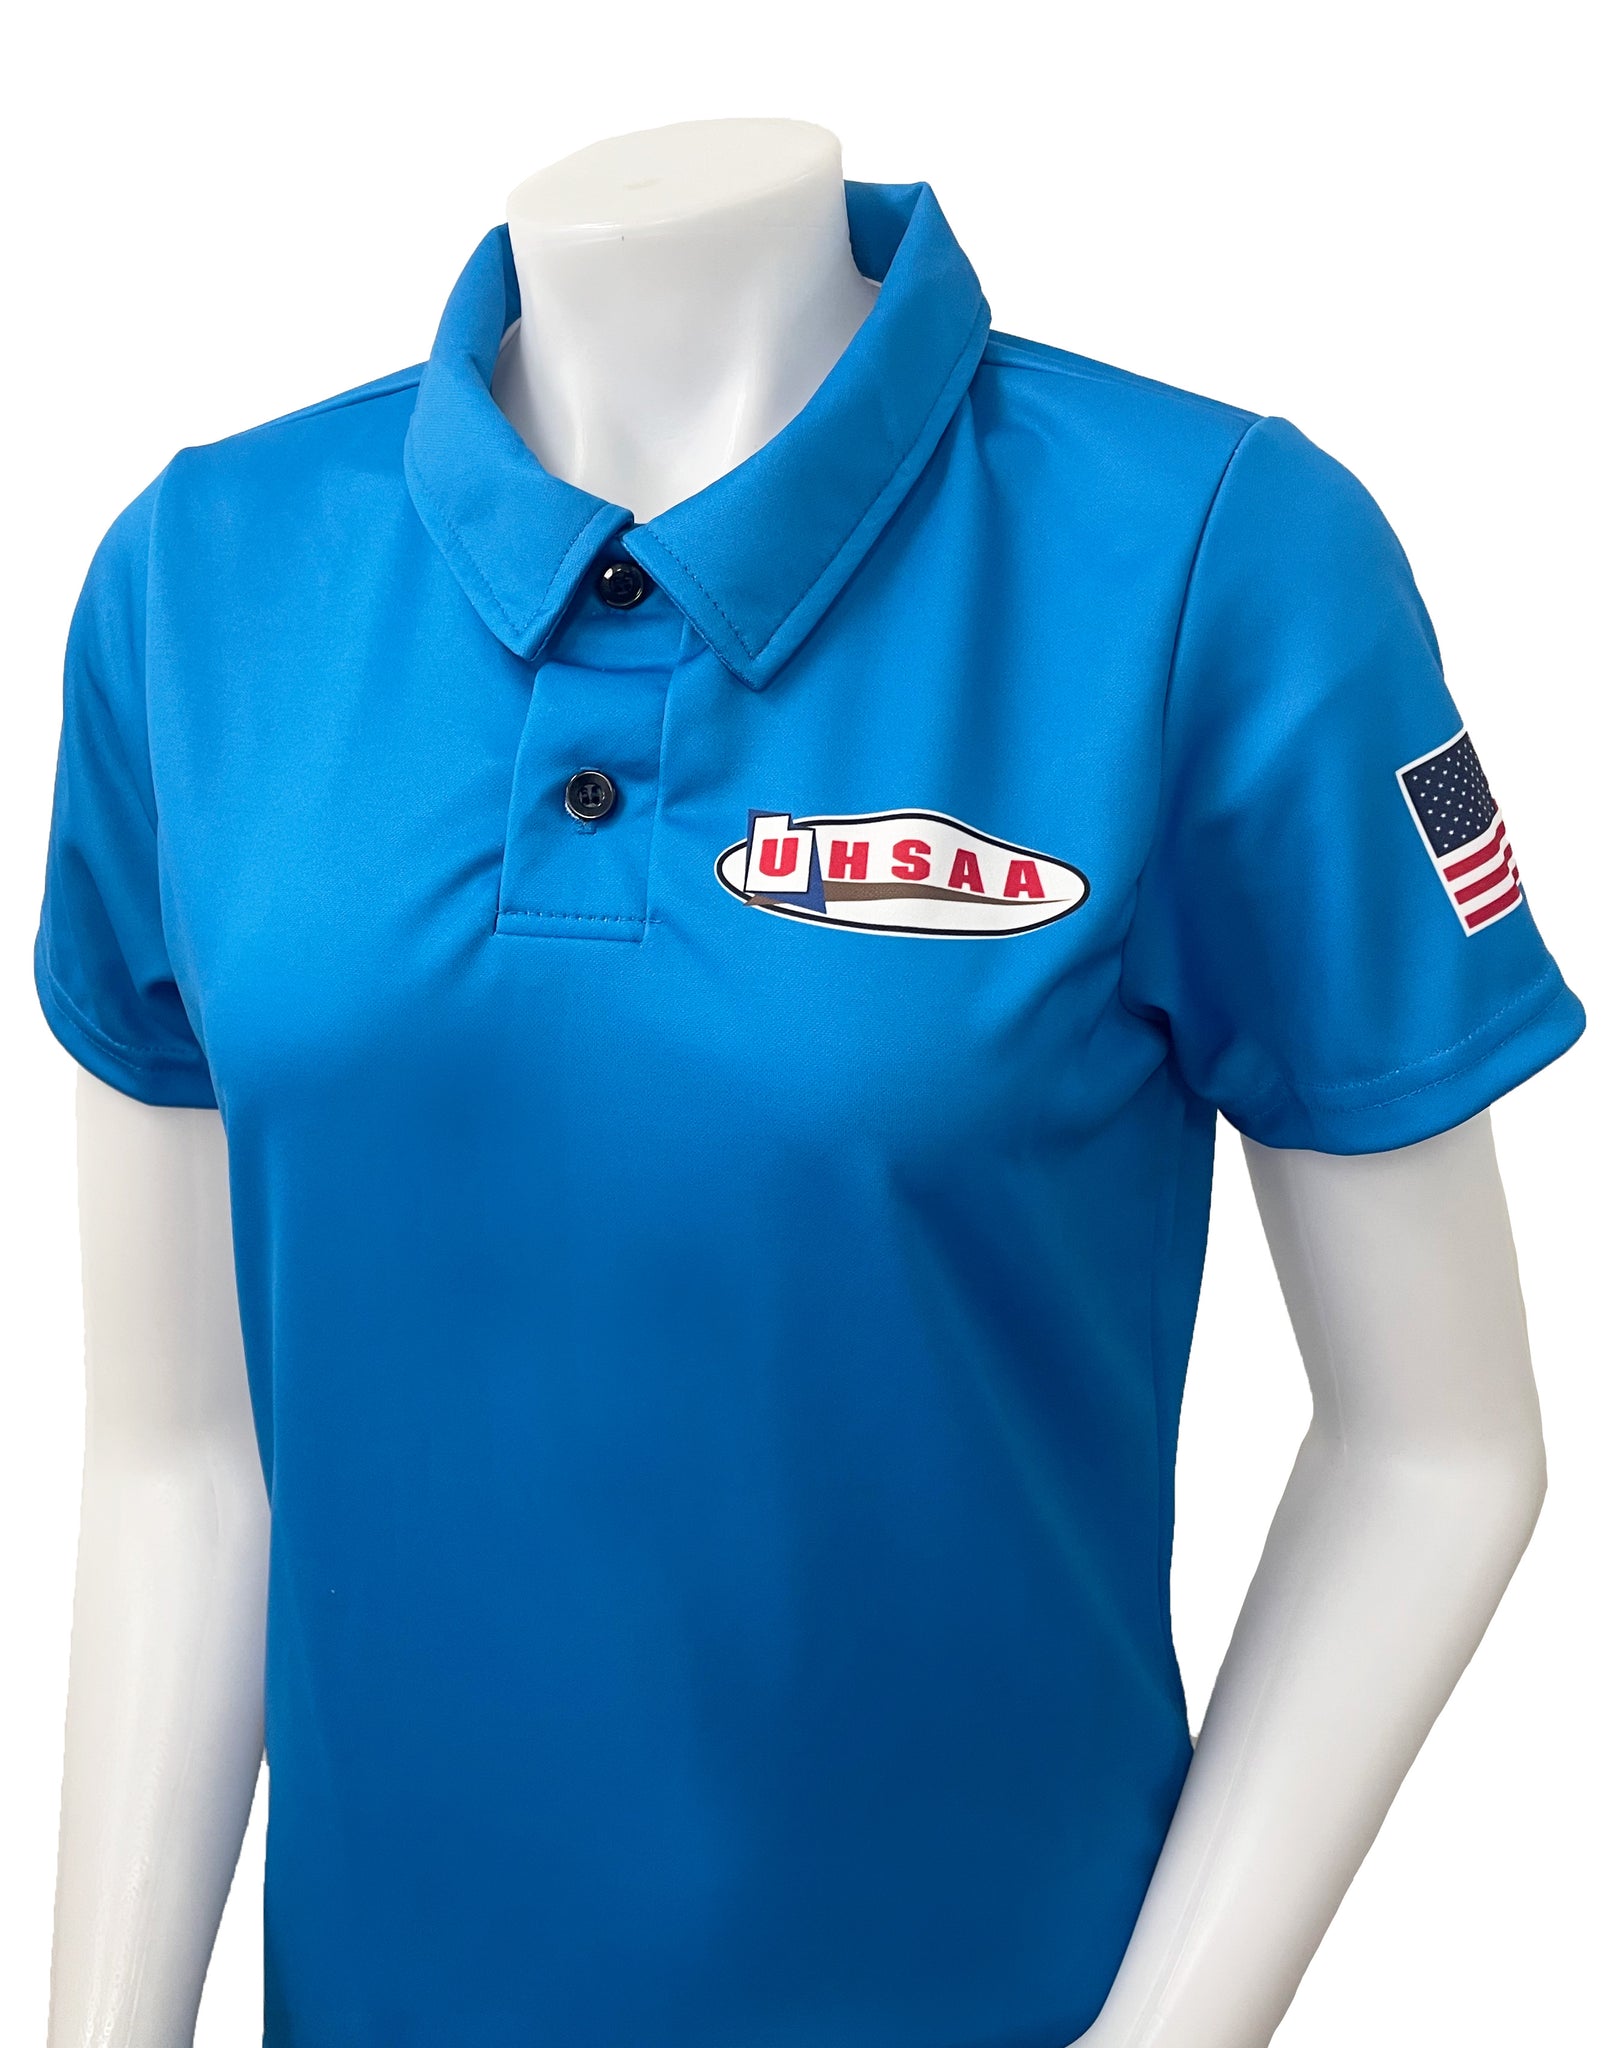 USA402UT-BB - Smitty "Made in USA" - Volleyball Women's "BRIGHT BLUE" Short Sleeve Shirt